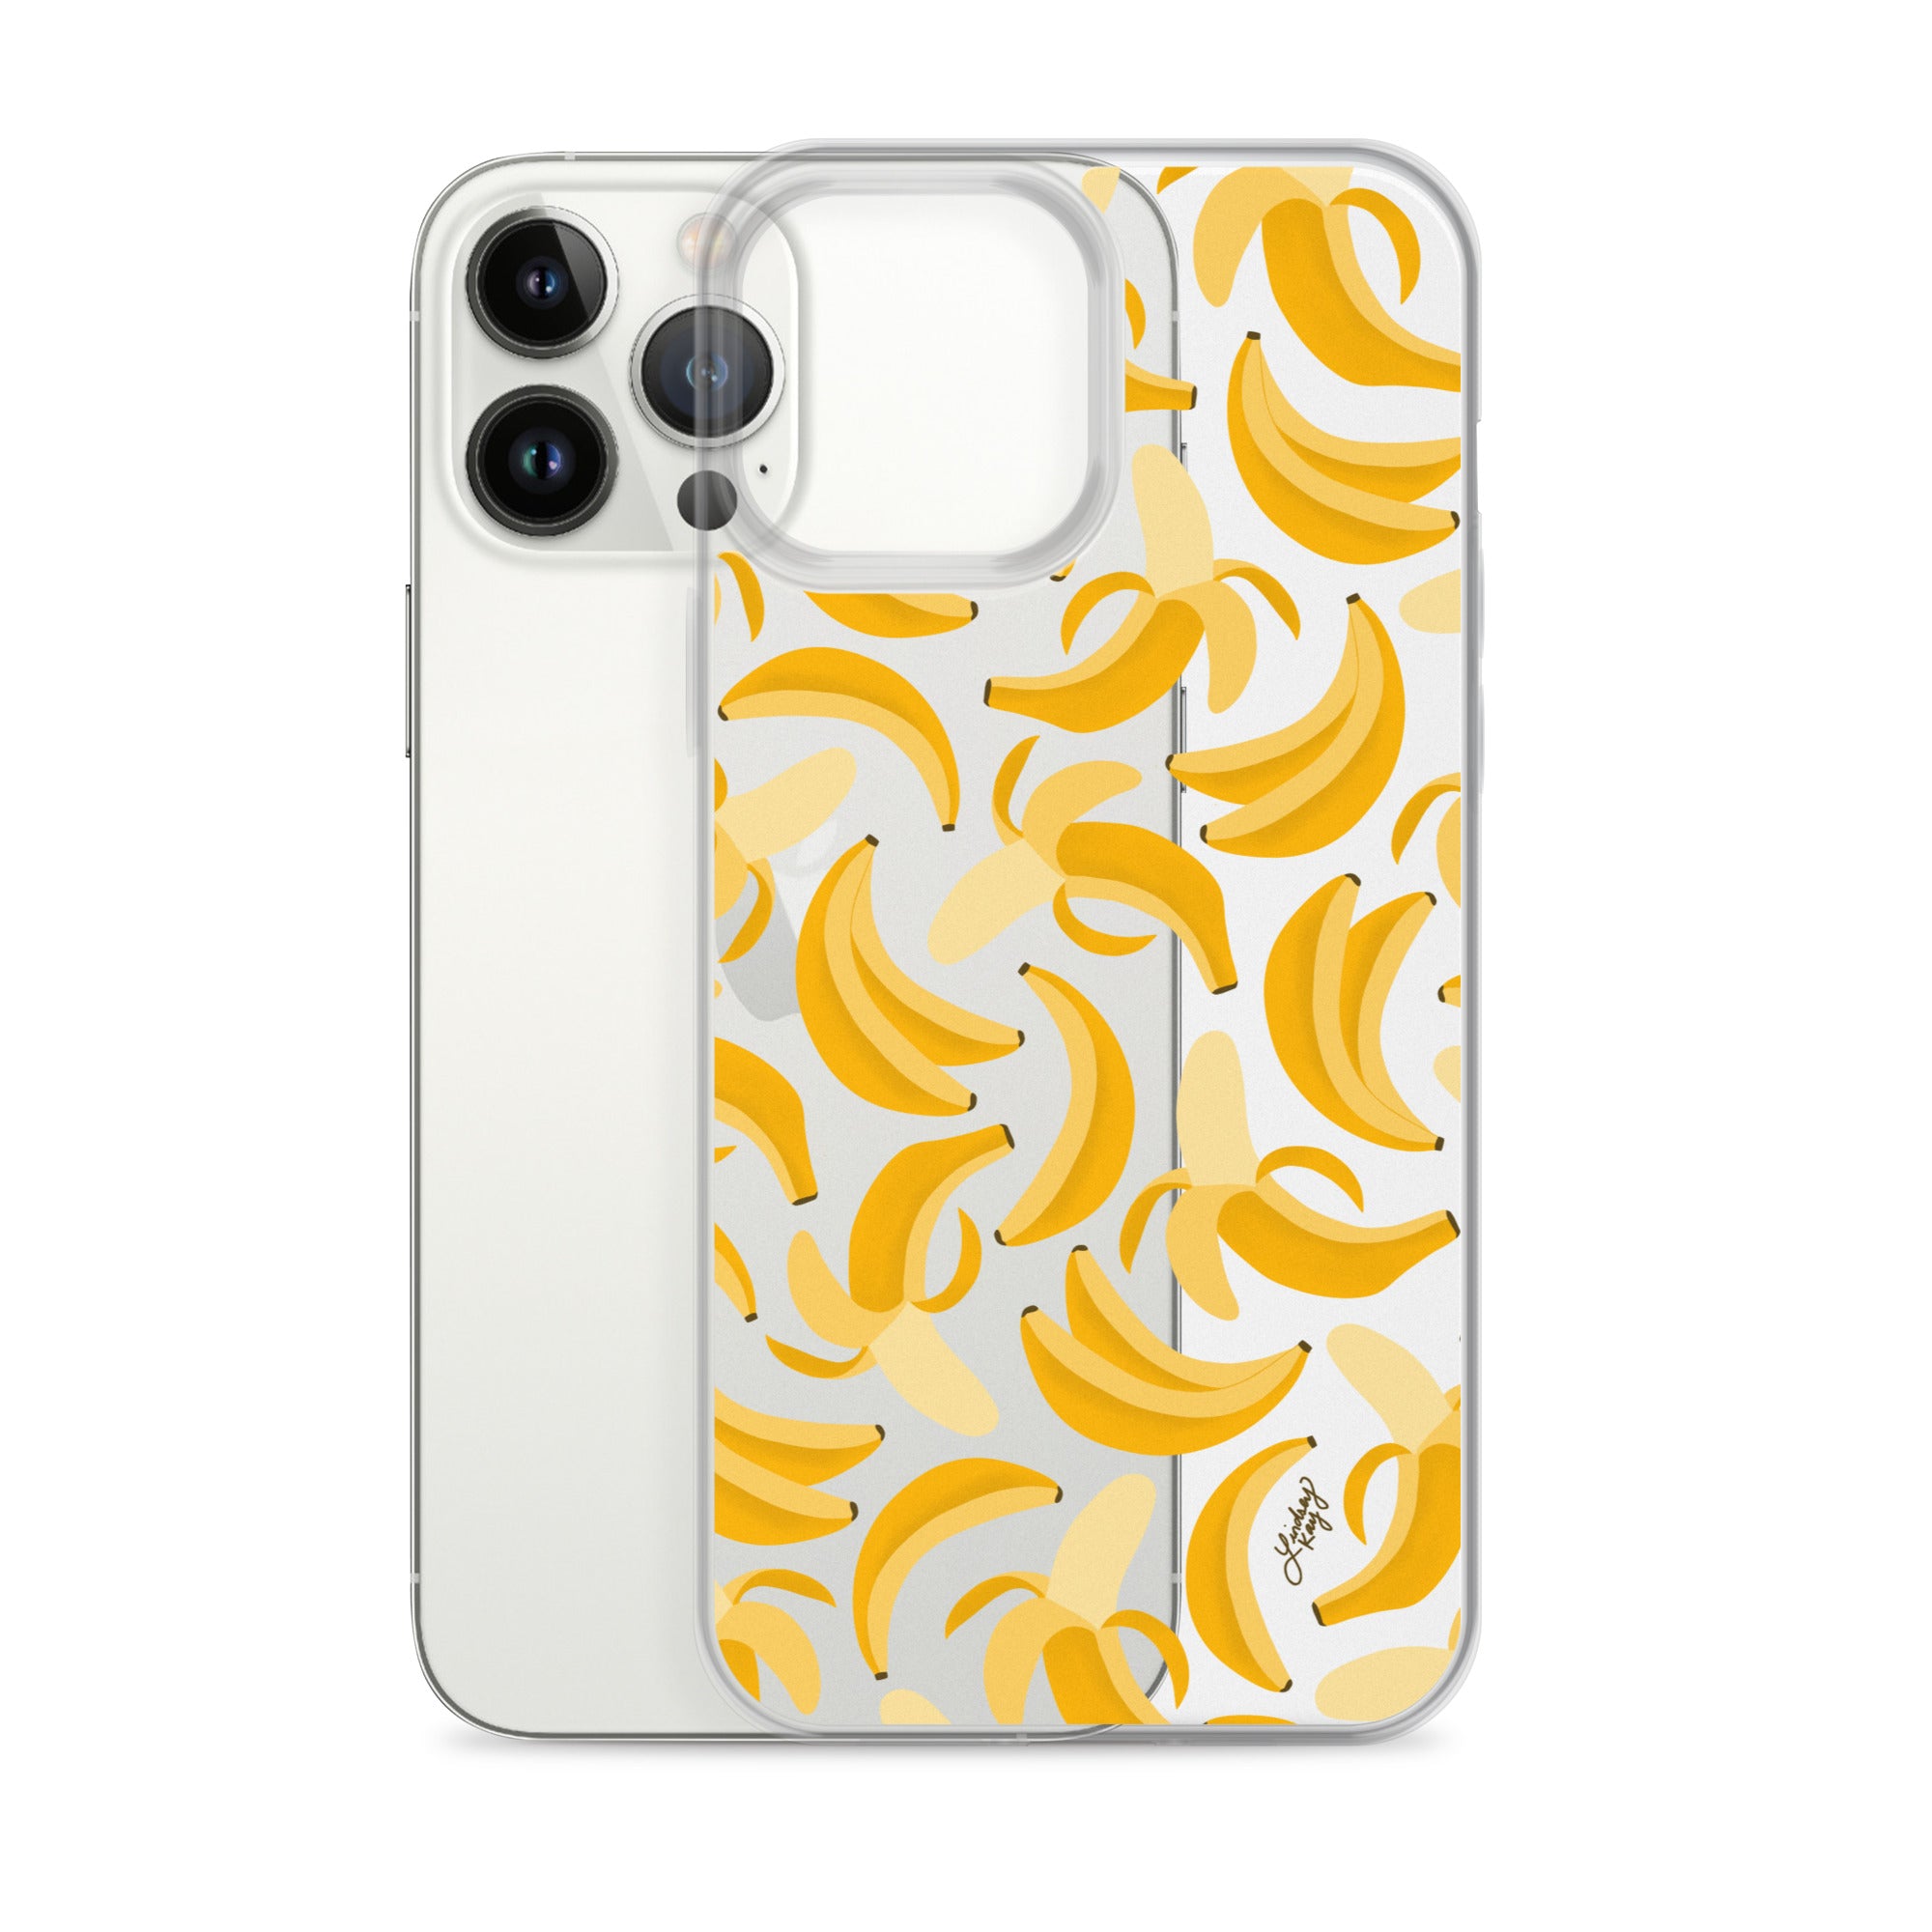 Banana's - Funda transparente para iPhone®